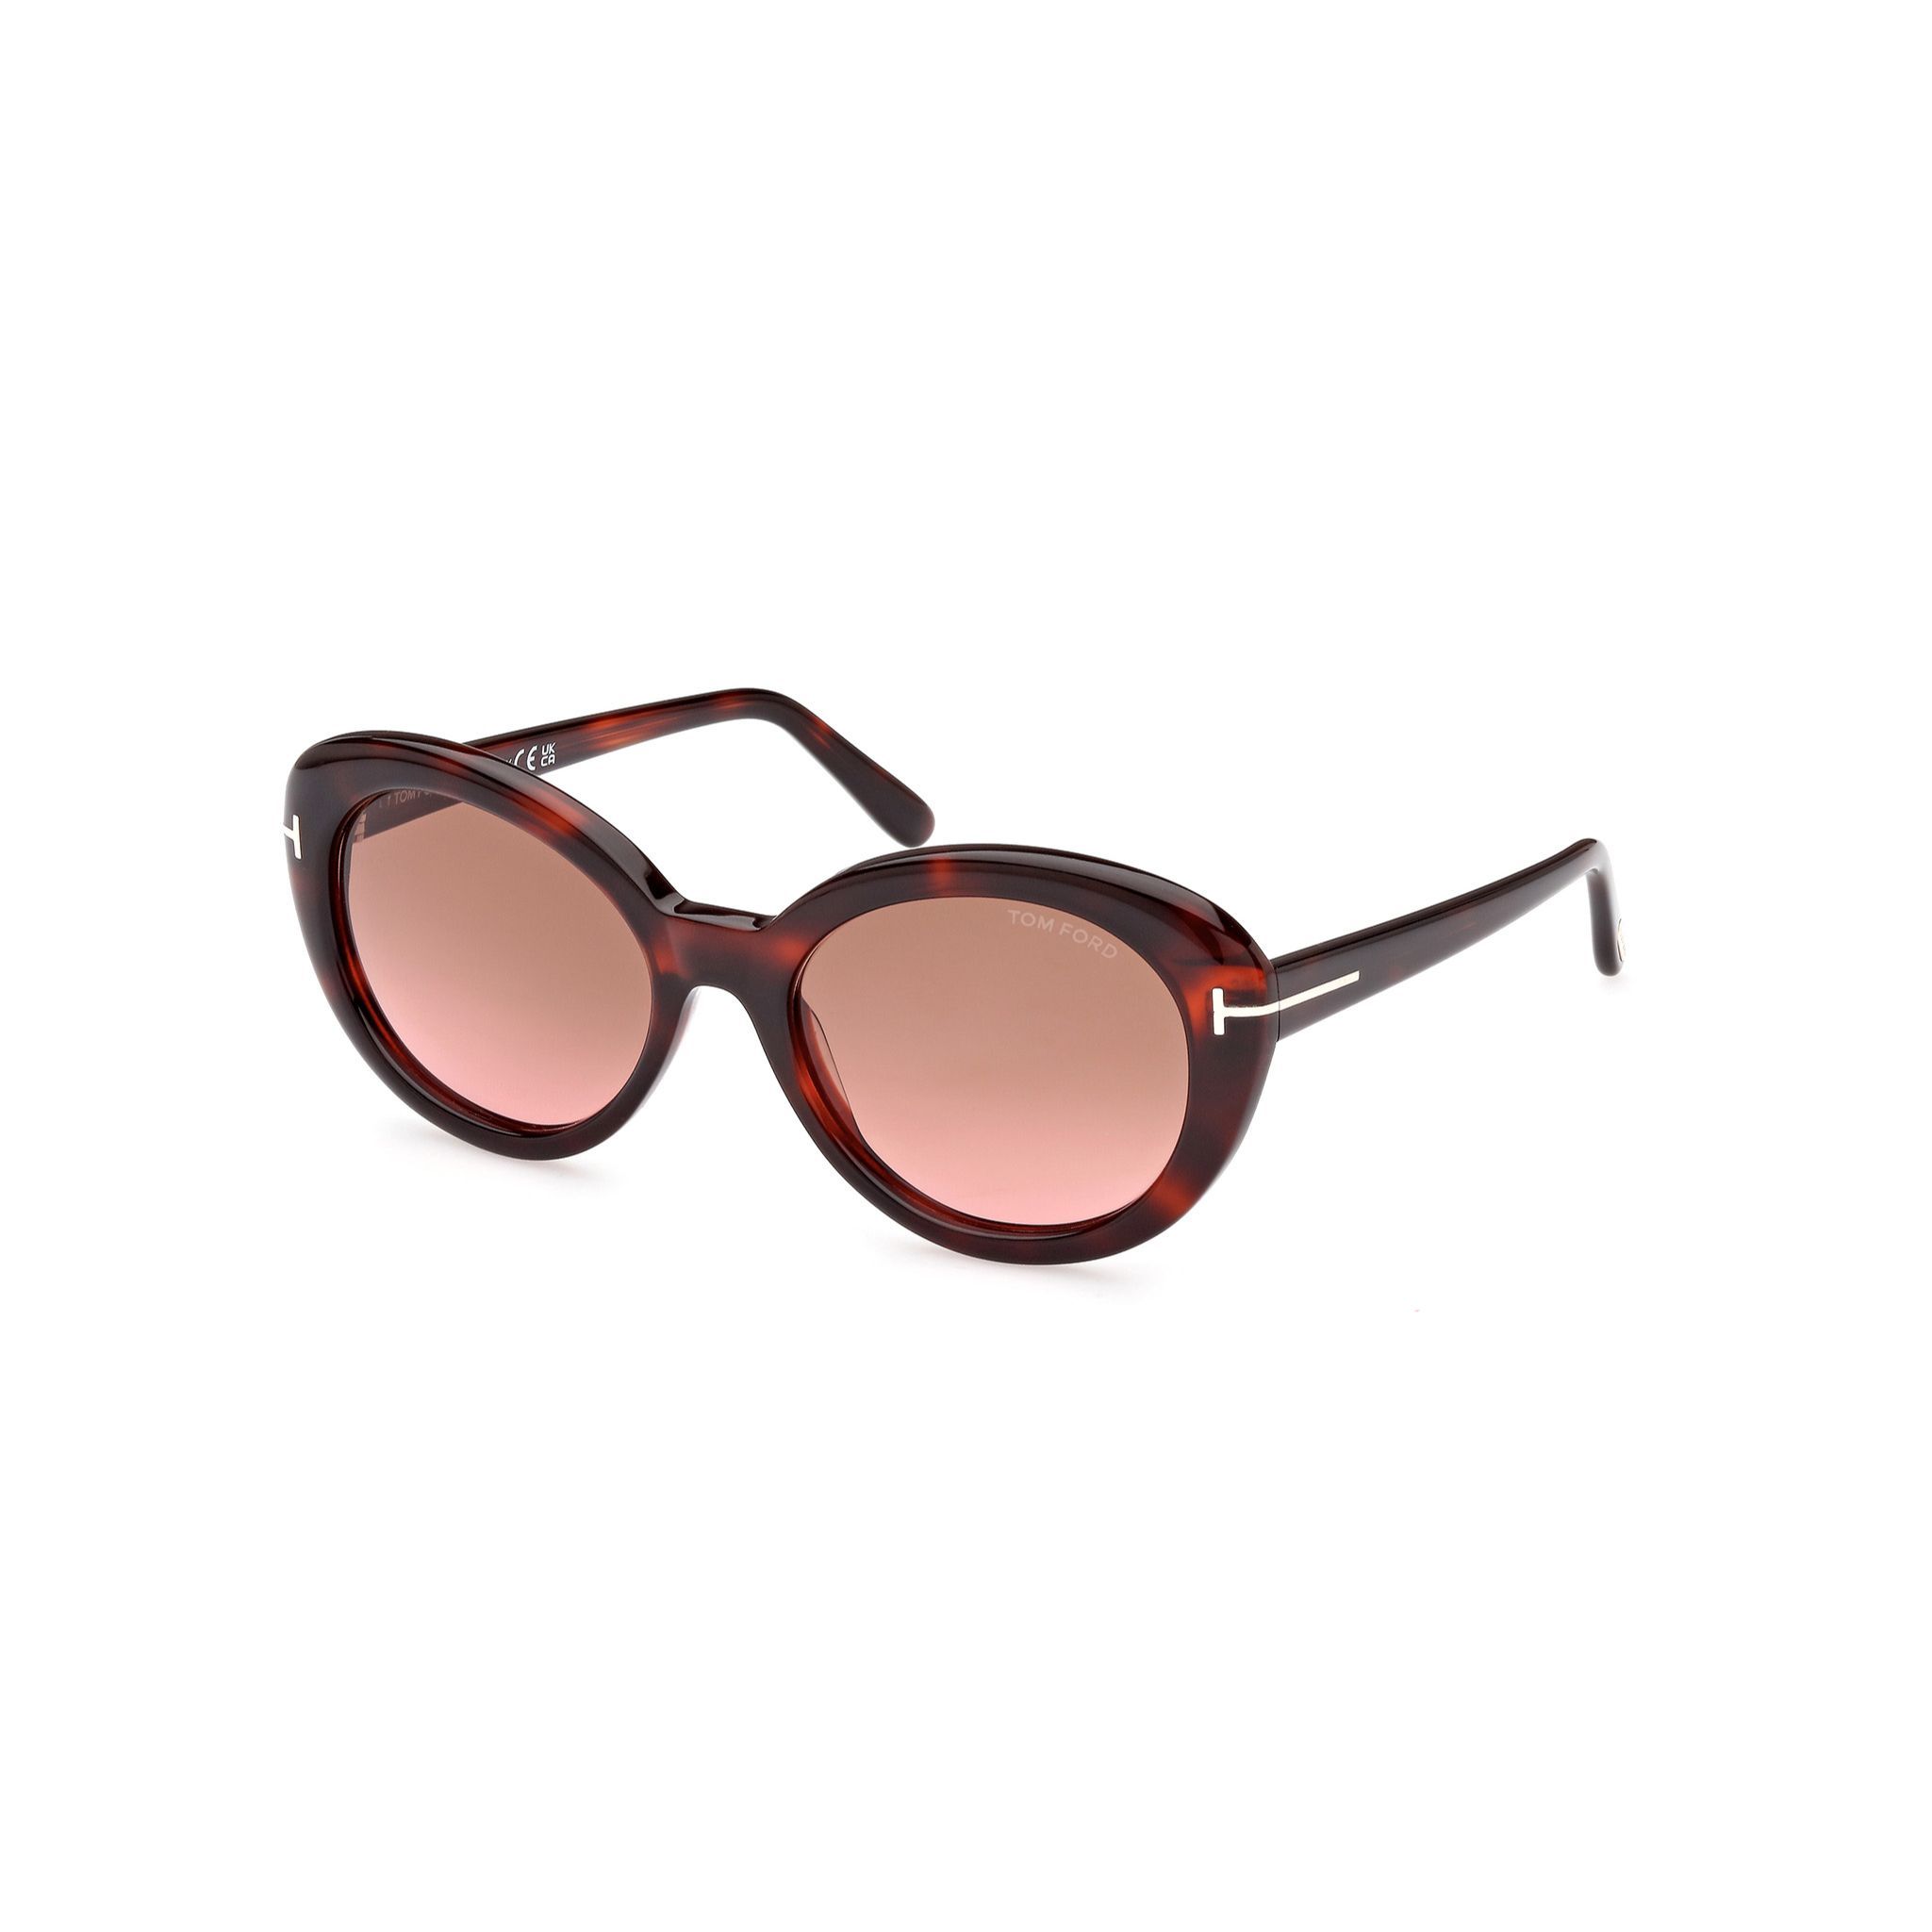 FT1009 Oval Sunglasses 54B - size 55